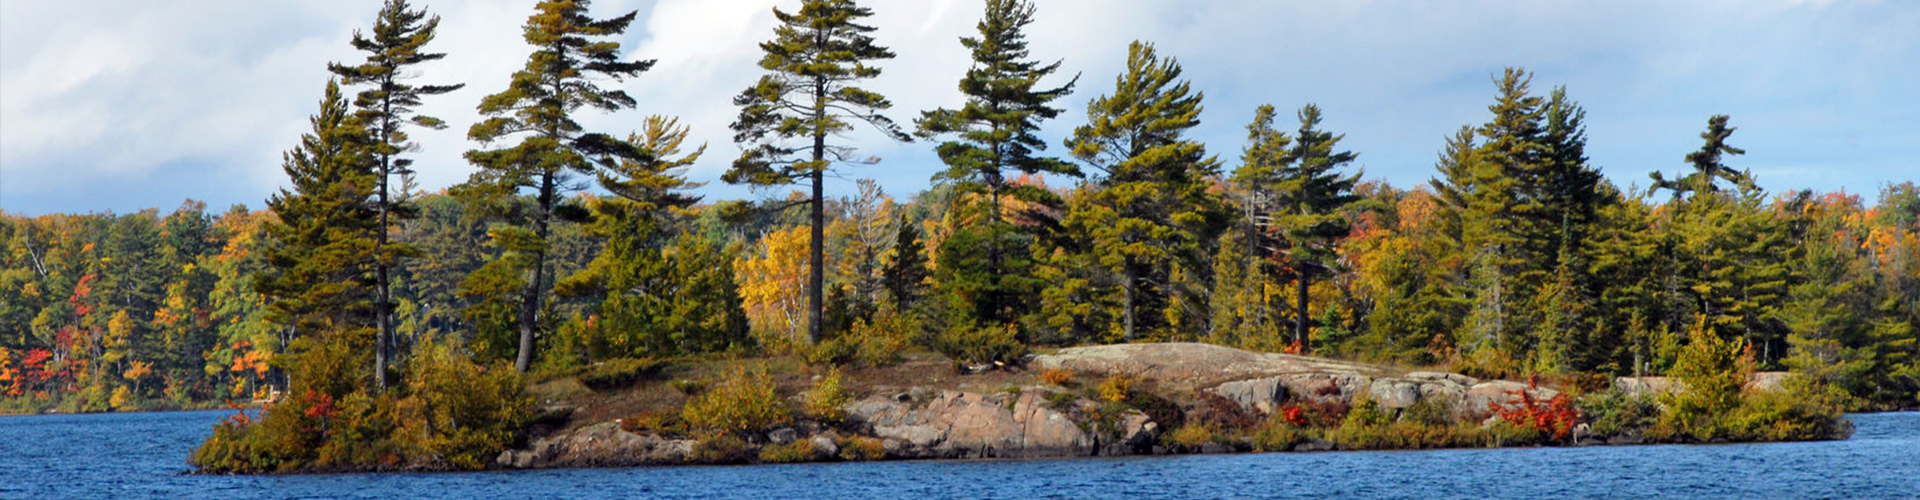 scrawny trees on a rocky island on blue waters